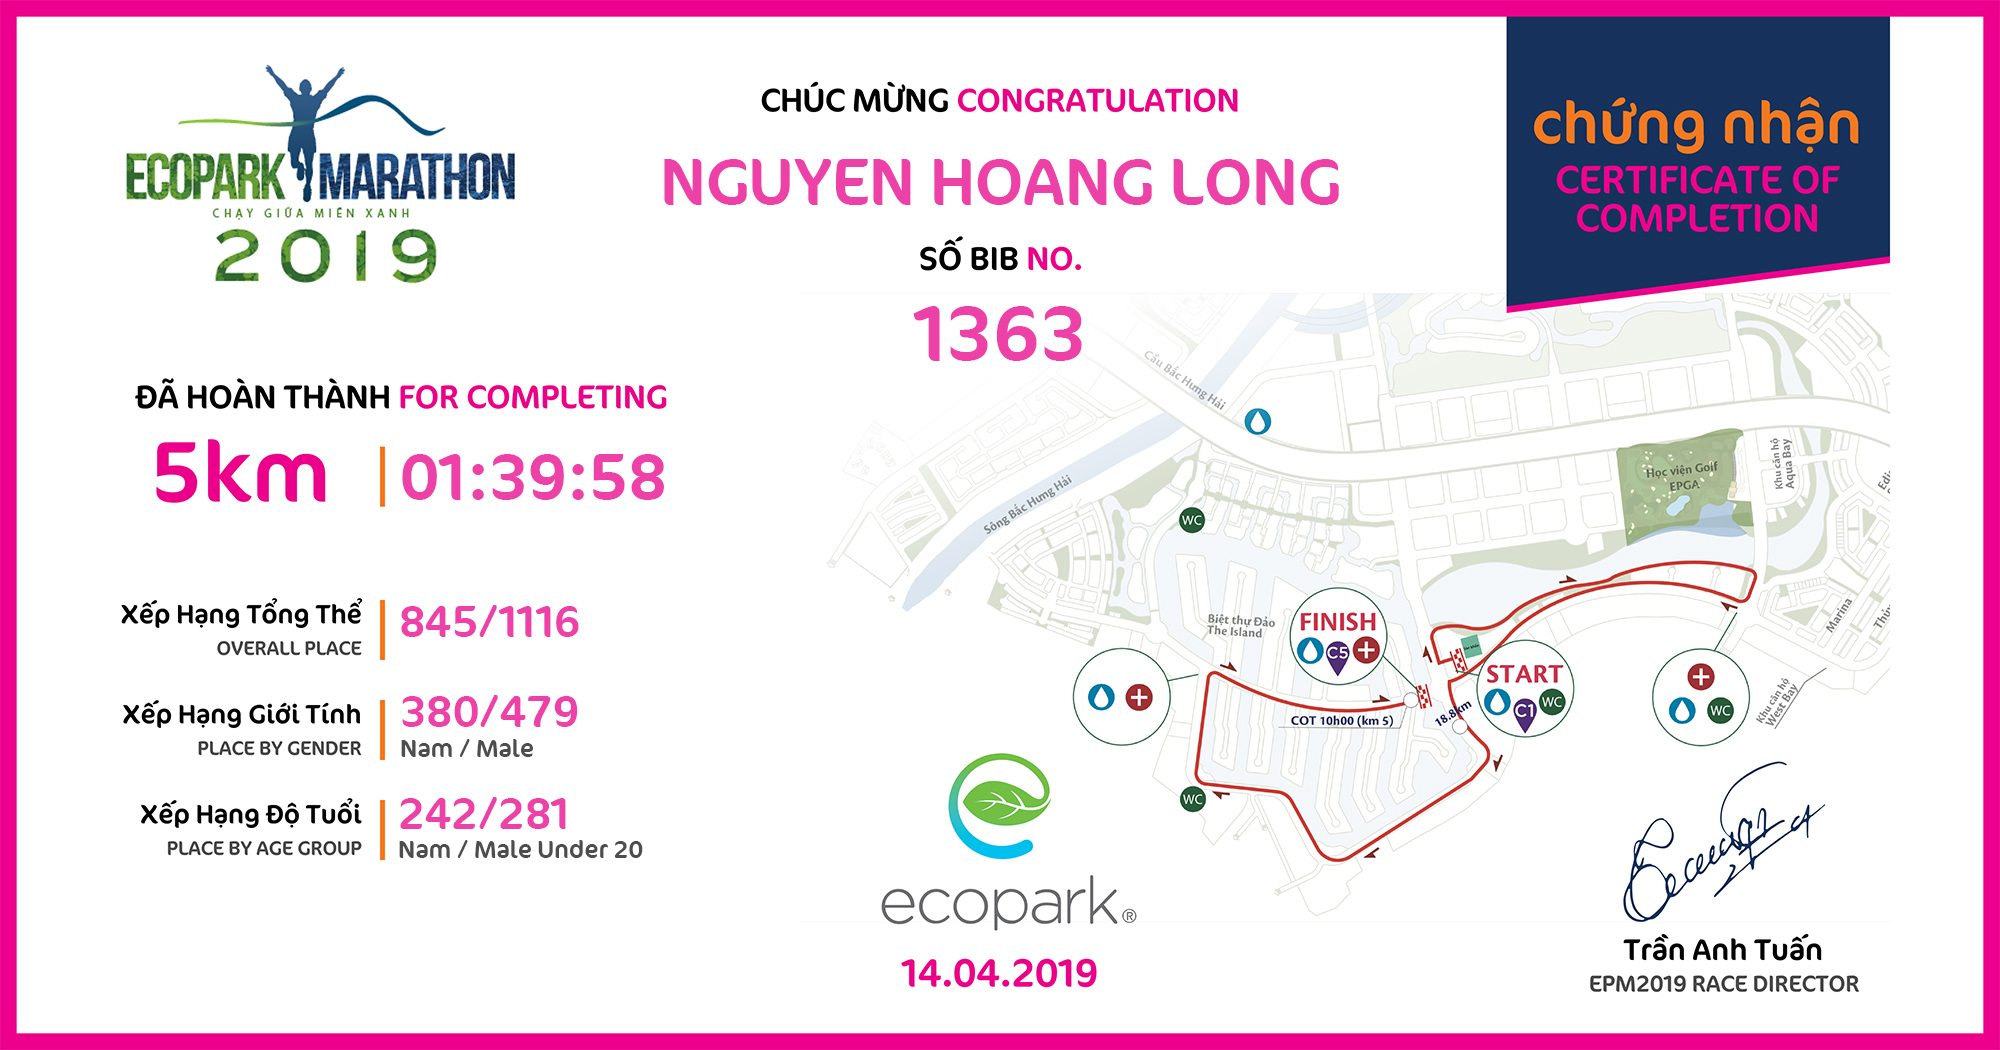 1363 - NGUYEN HOANG LONG